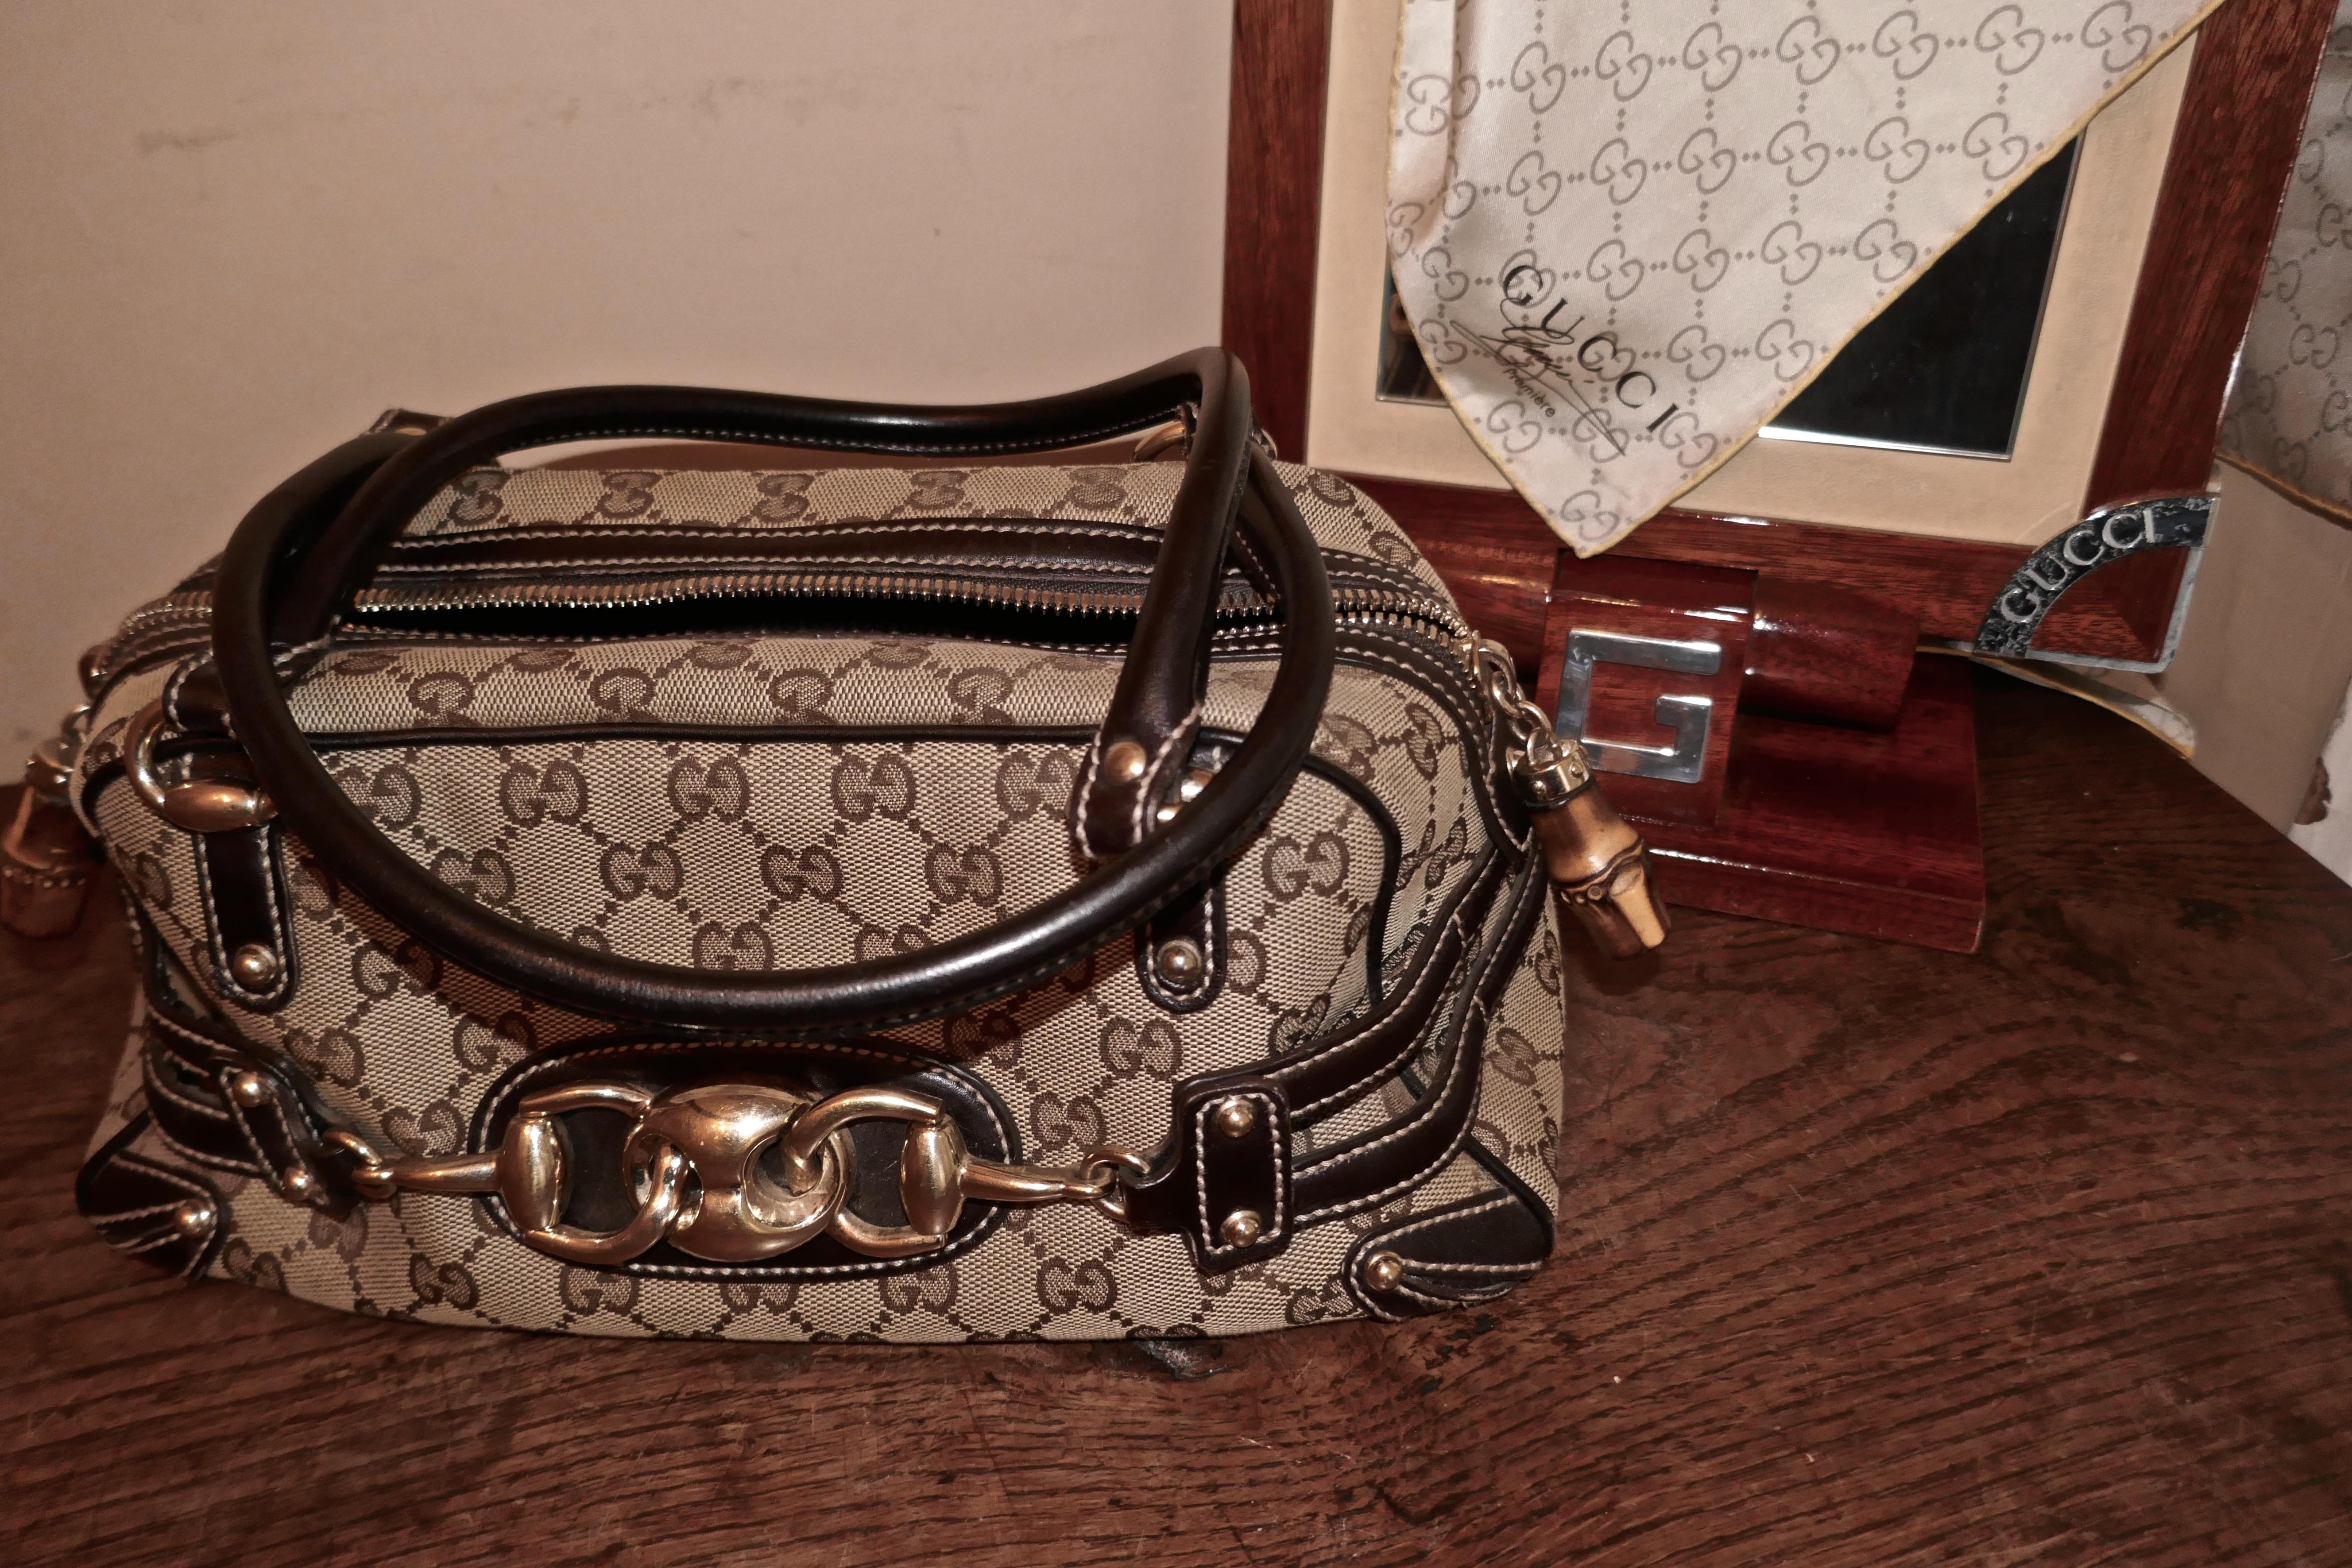  Gucci Vintage Satchel in Guccissima Canvas Wave Handbag, Horse-Bit and Monogram 2